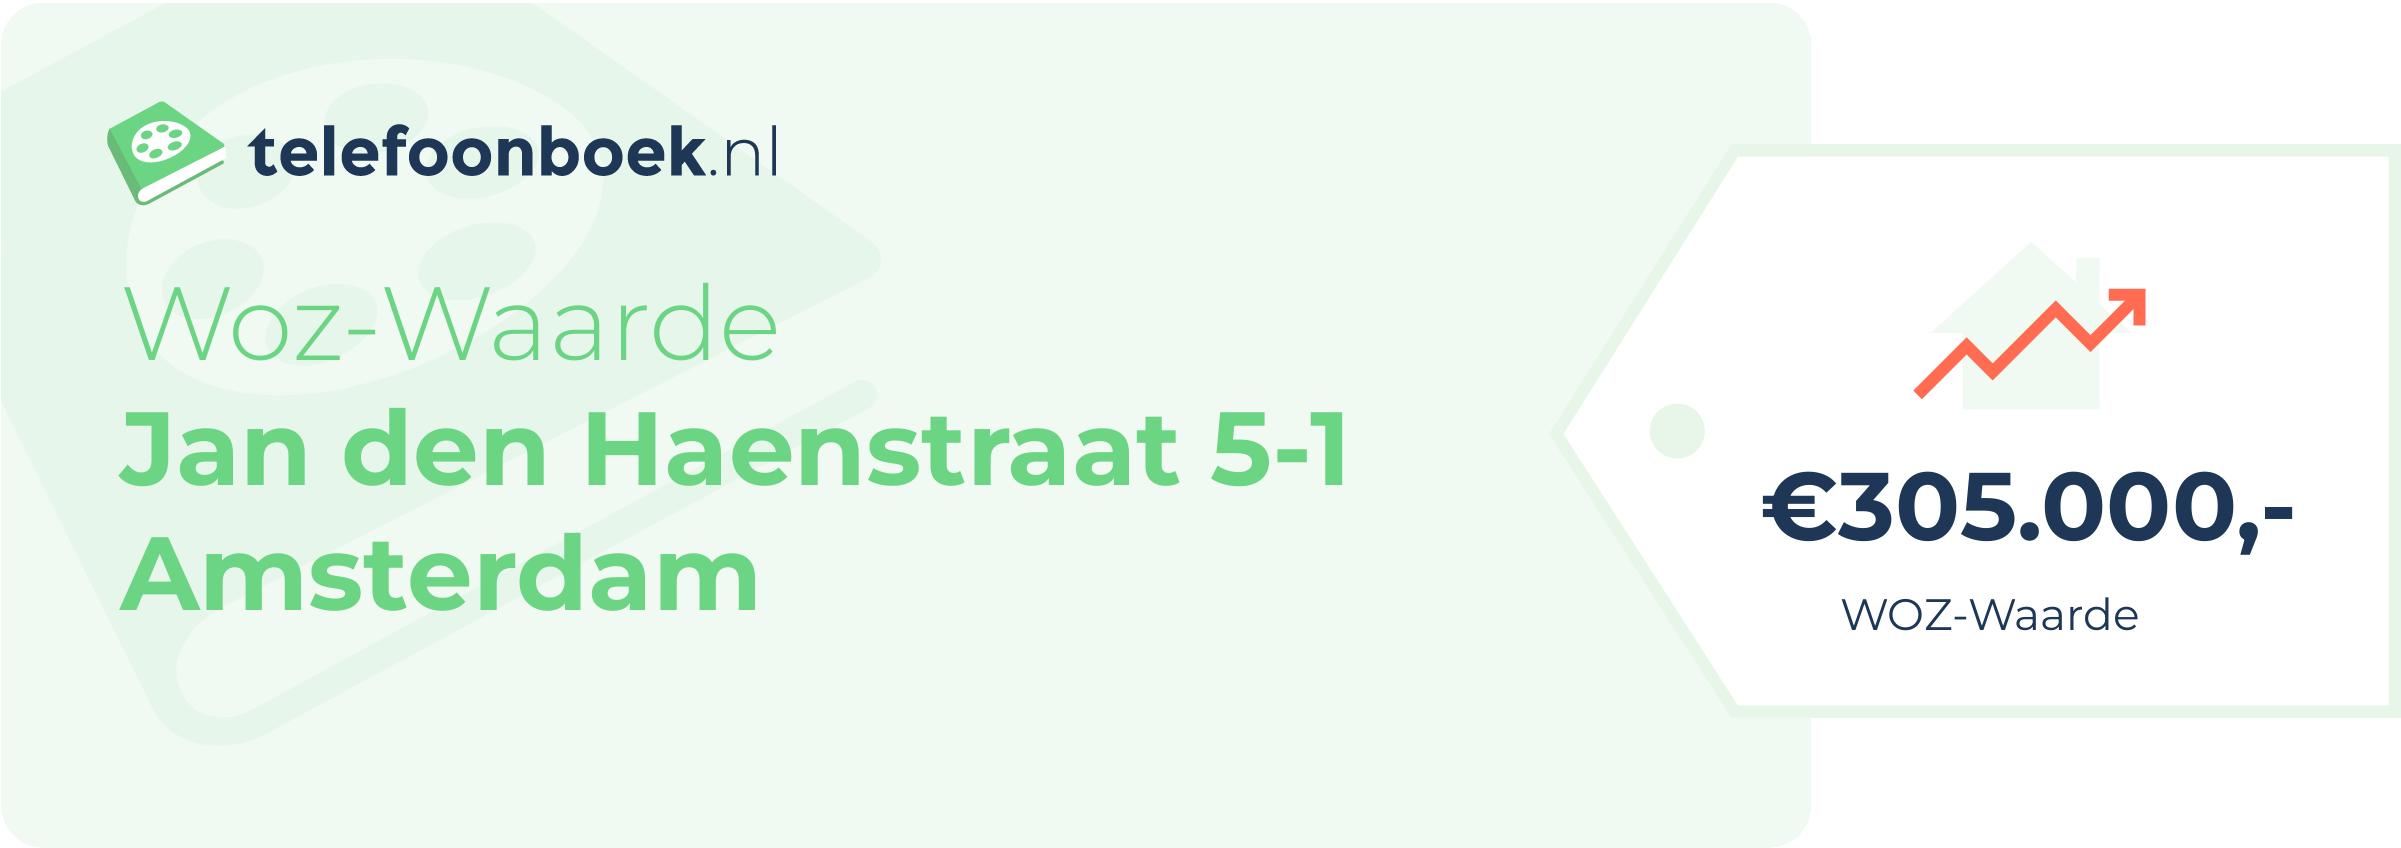 WOZ-waarde Jan Den Haenstraat 5-1 Amsterdam